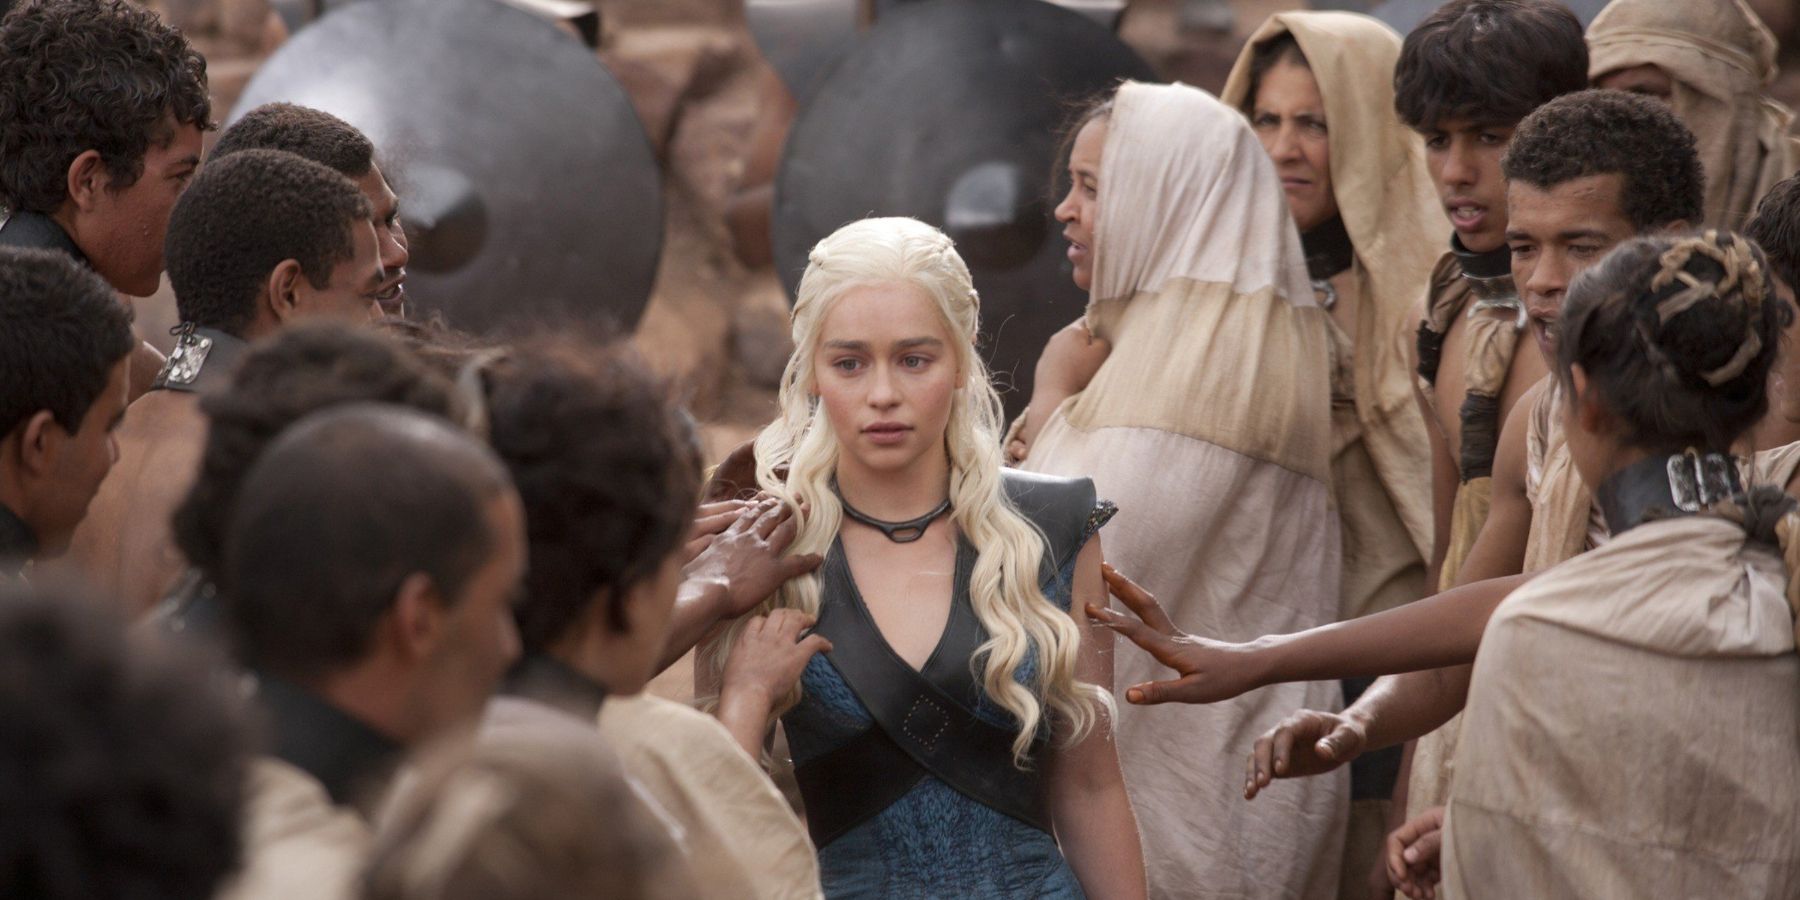 Daenerys Targaryen is hailed as Mhysa by Yunkish in Game of Thrones.